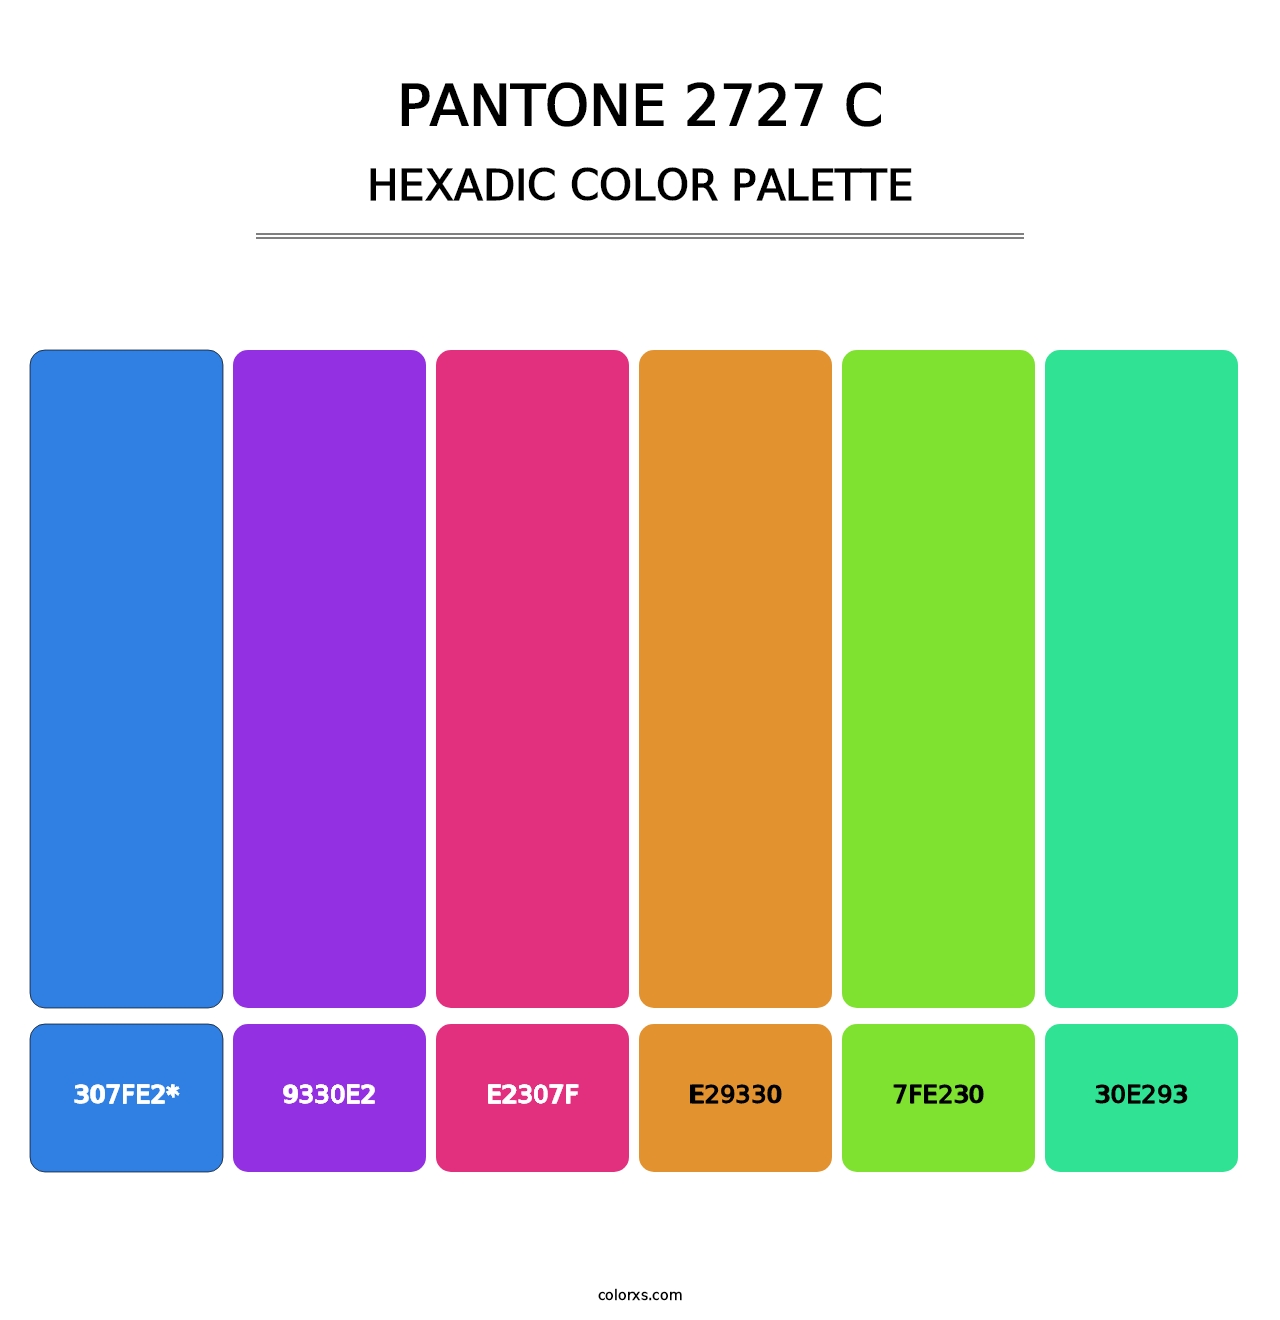 PANTONE 2727 C - Hexadic Color Palette